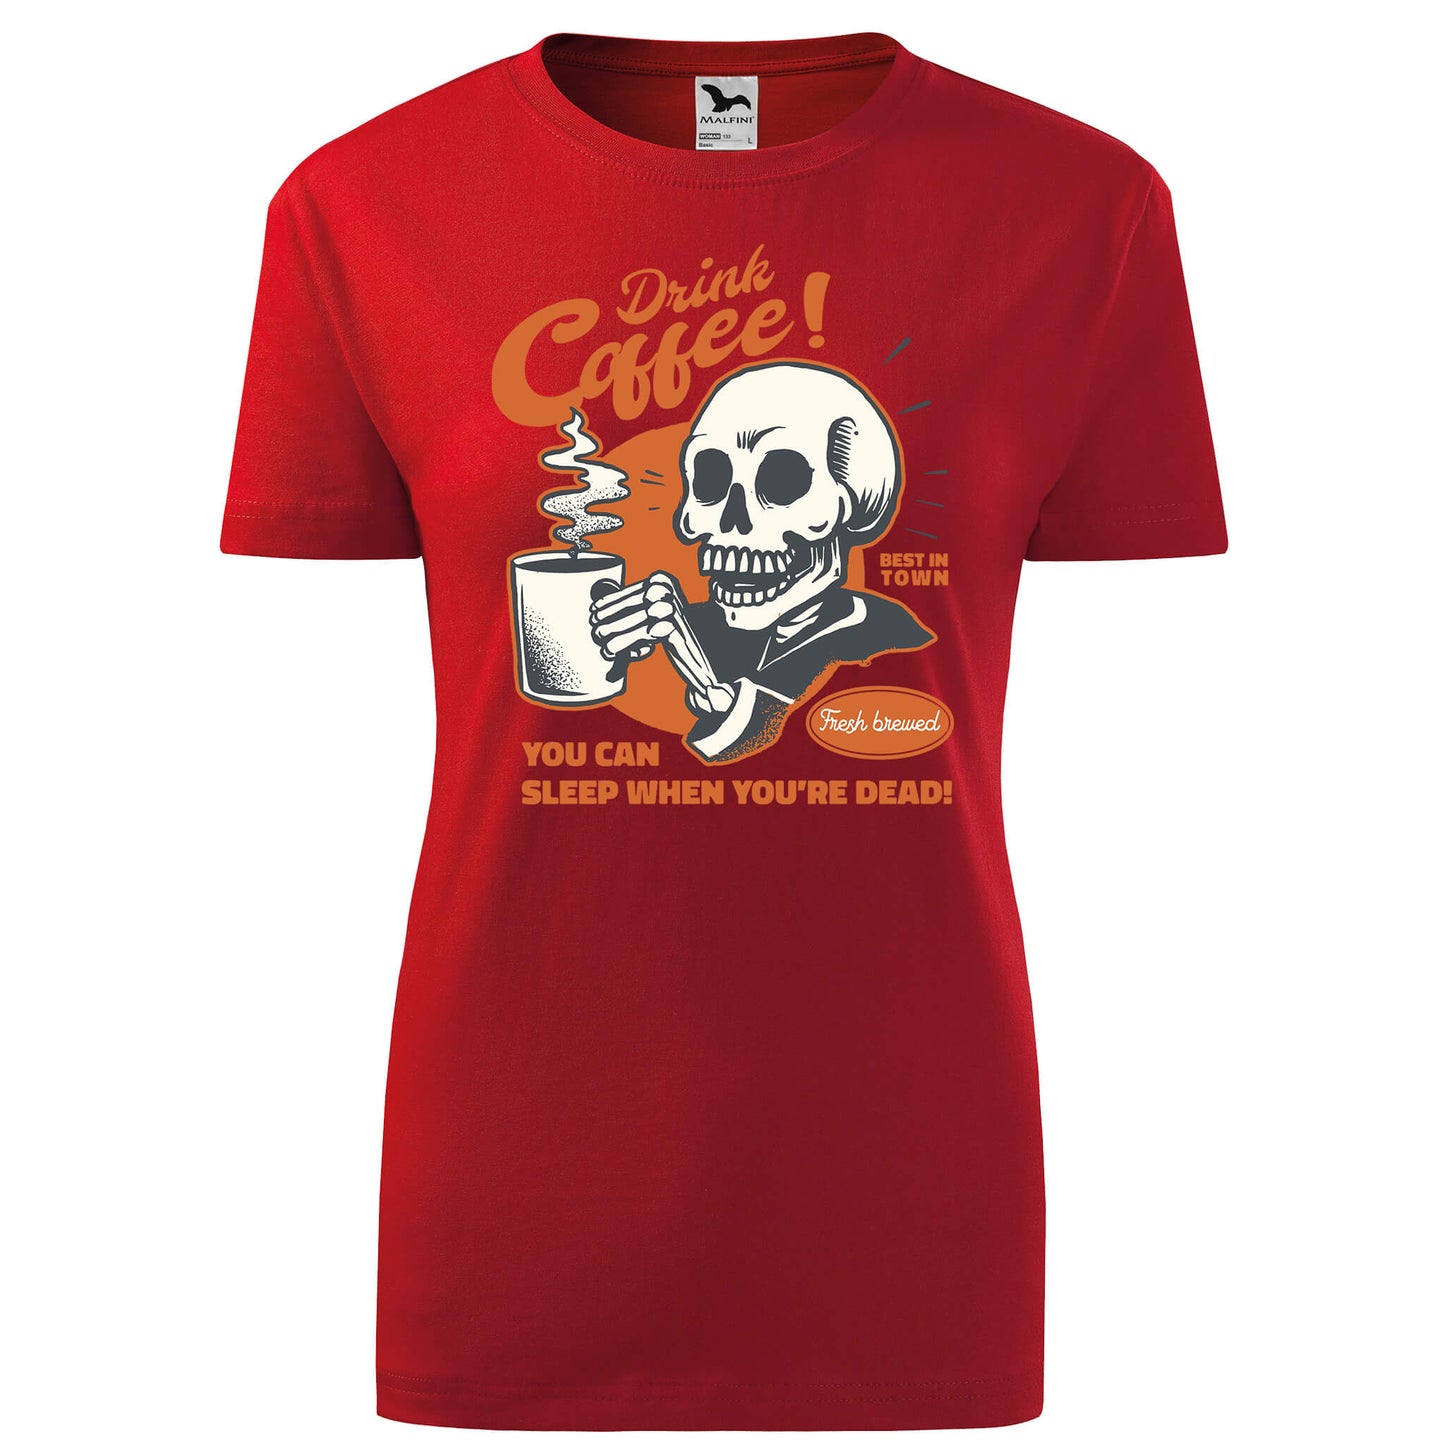 Drink coffee t-shirt - rvdesignprint